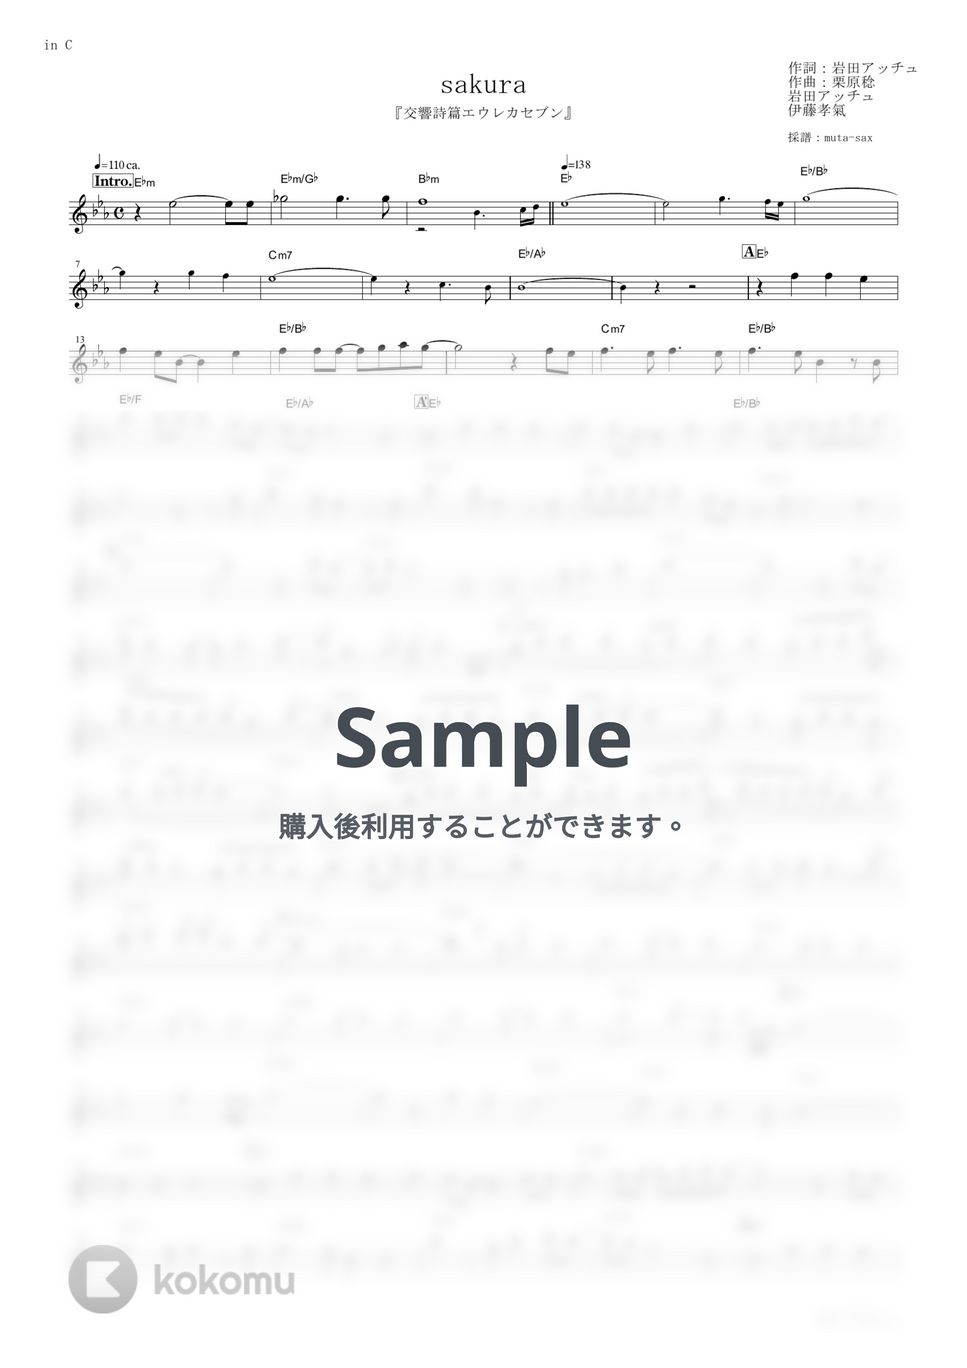 NIRGILIS - sakura (『交響詩篇エウレカセブン』 / in C) by muta-sax